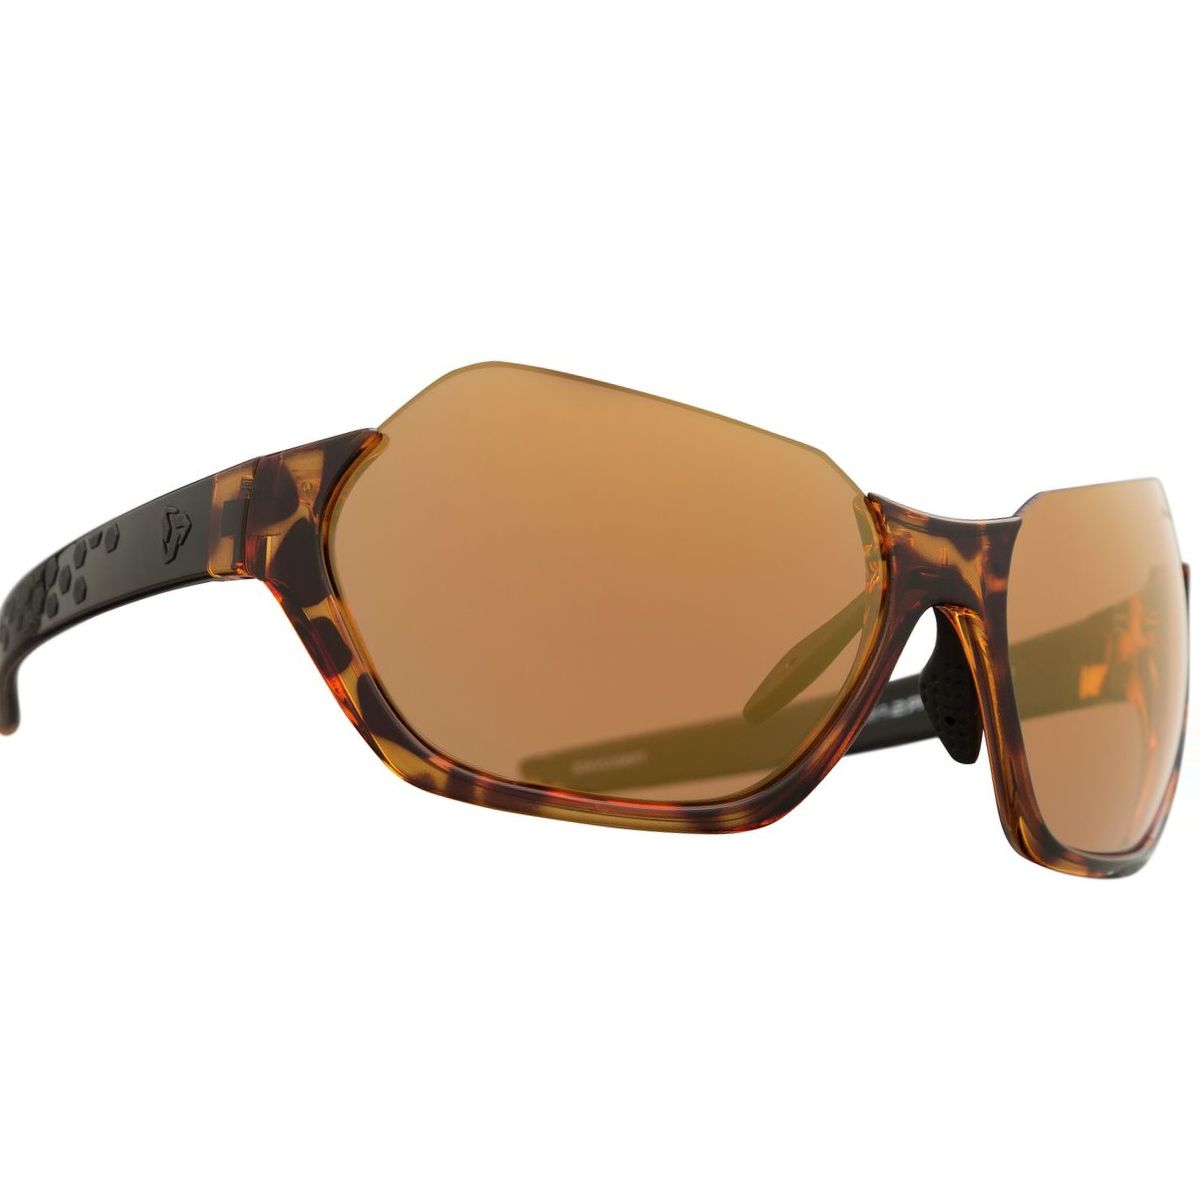 Ryders Eyewear Flyp Photochromic Sunglasses - Women's